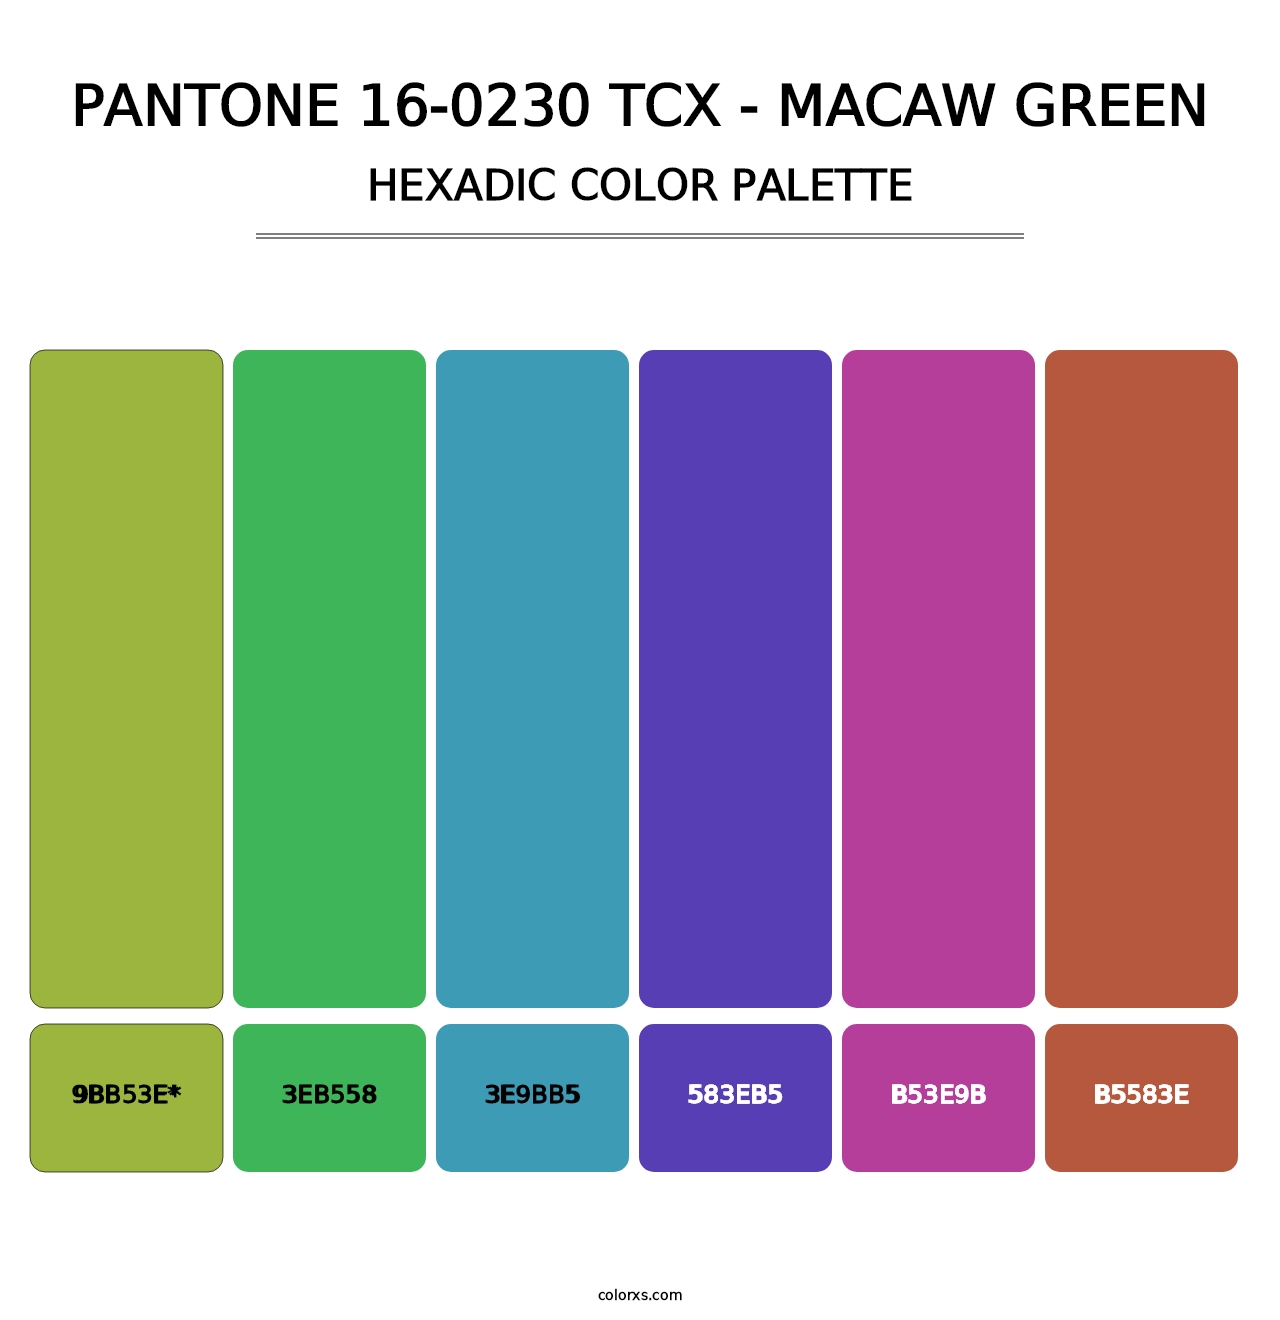 PANTONE 16-0230 TCX - Macaw Green - Hexadic Color Palette